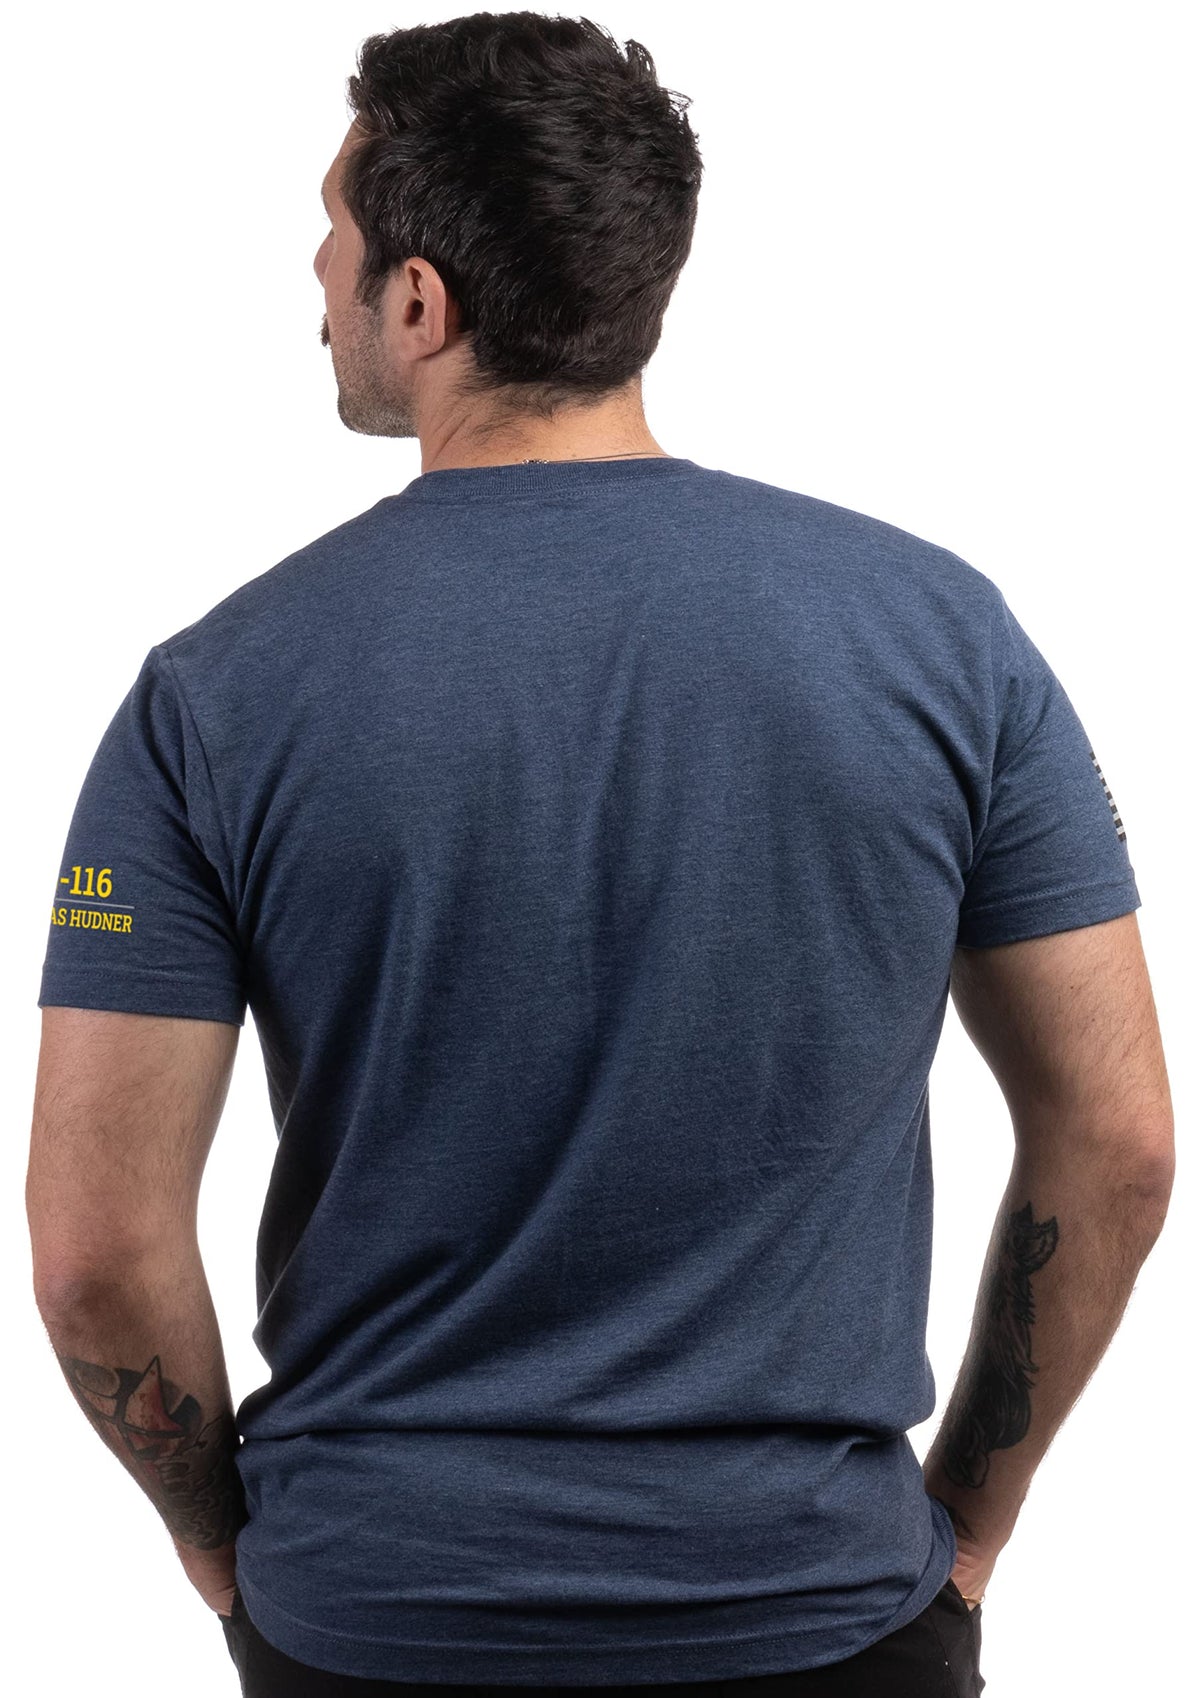 USS Thomas Hudner, DDG-116 | U.S. Navy Sailor Veteran USN United States Naval T-shirt for Men Women